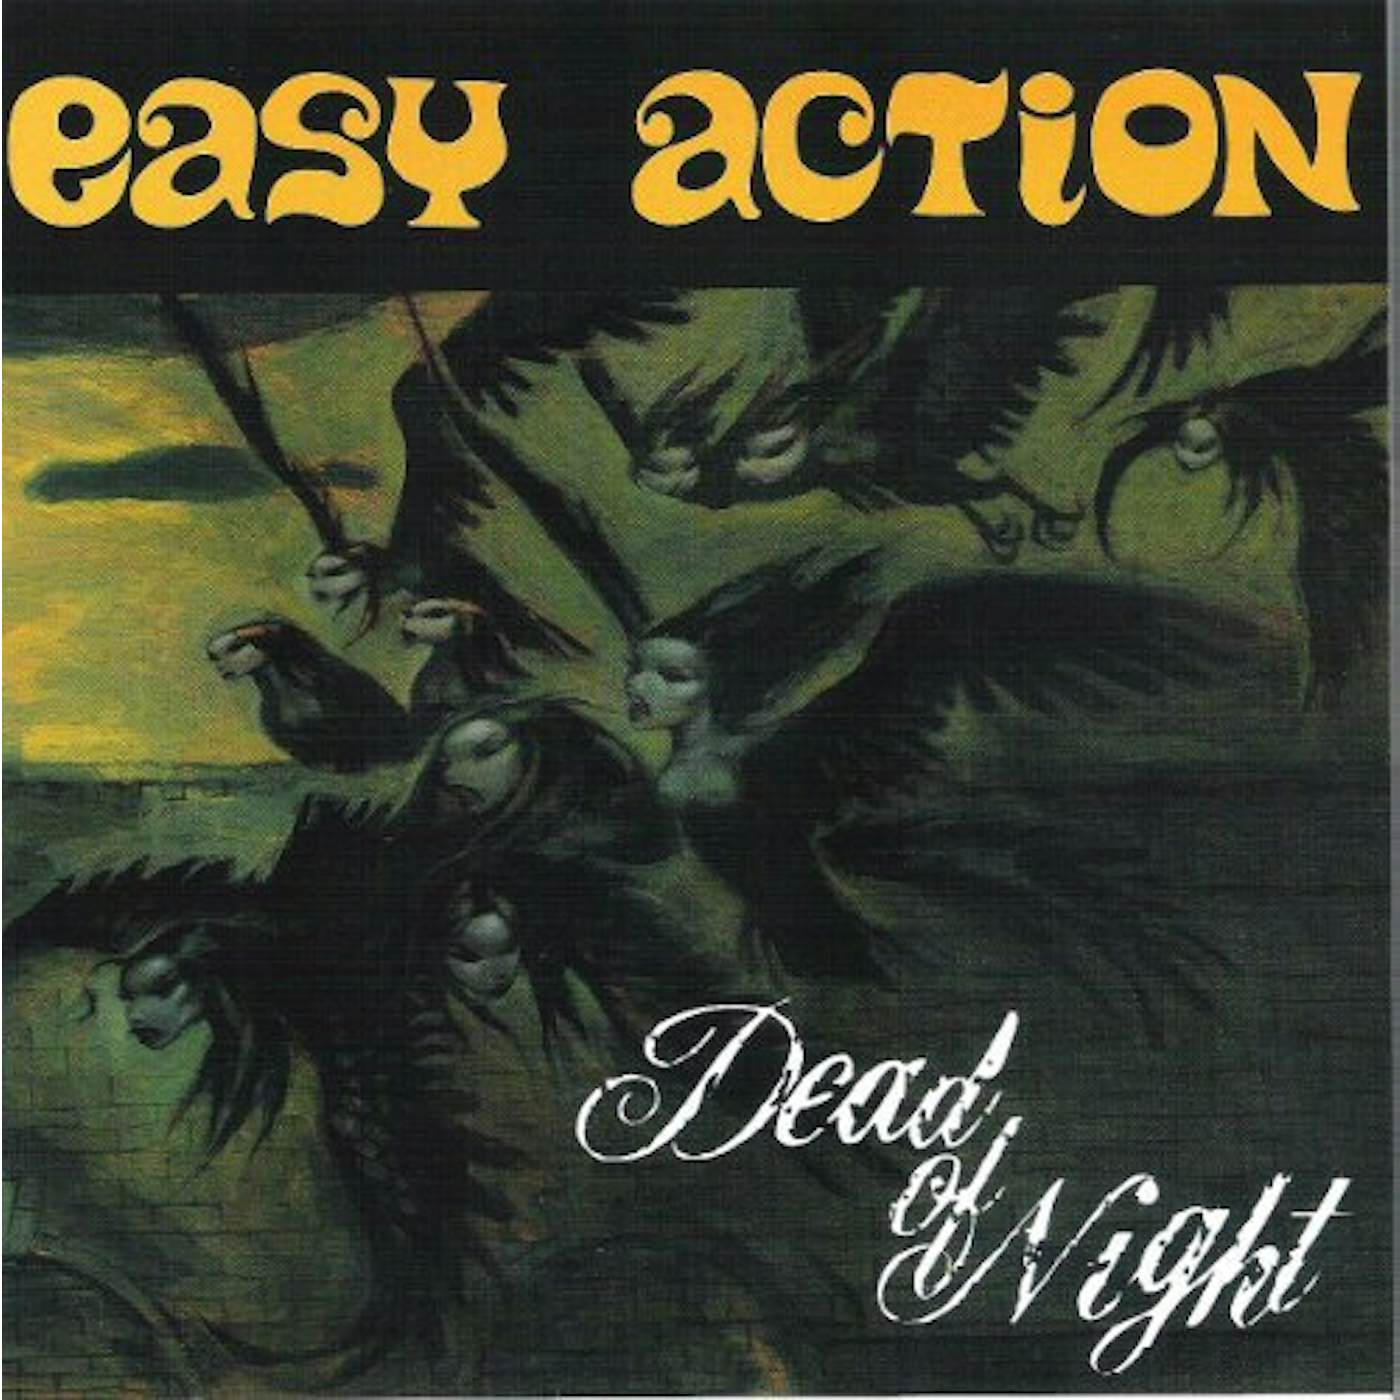 Easy Action Dead Of Night Vinyl Record